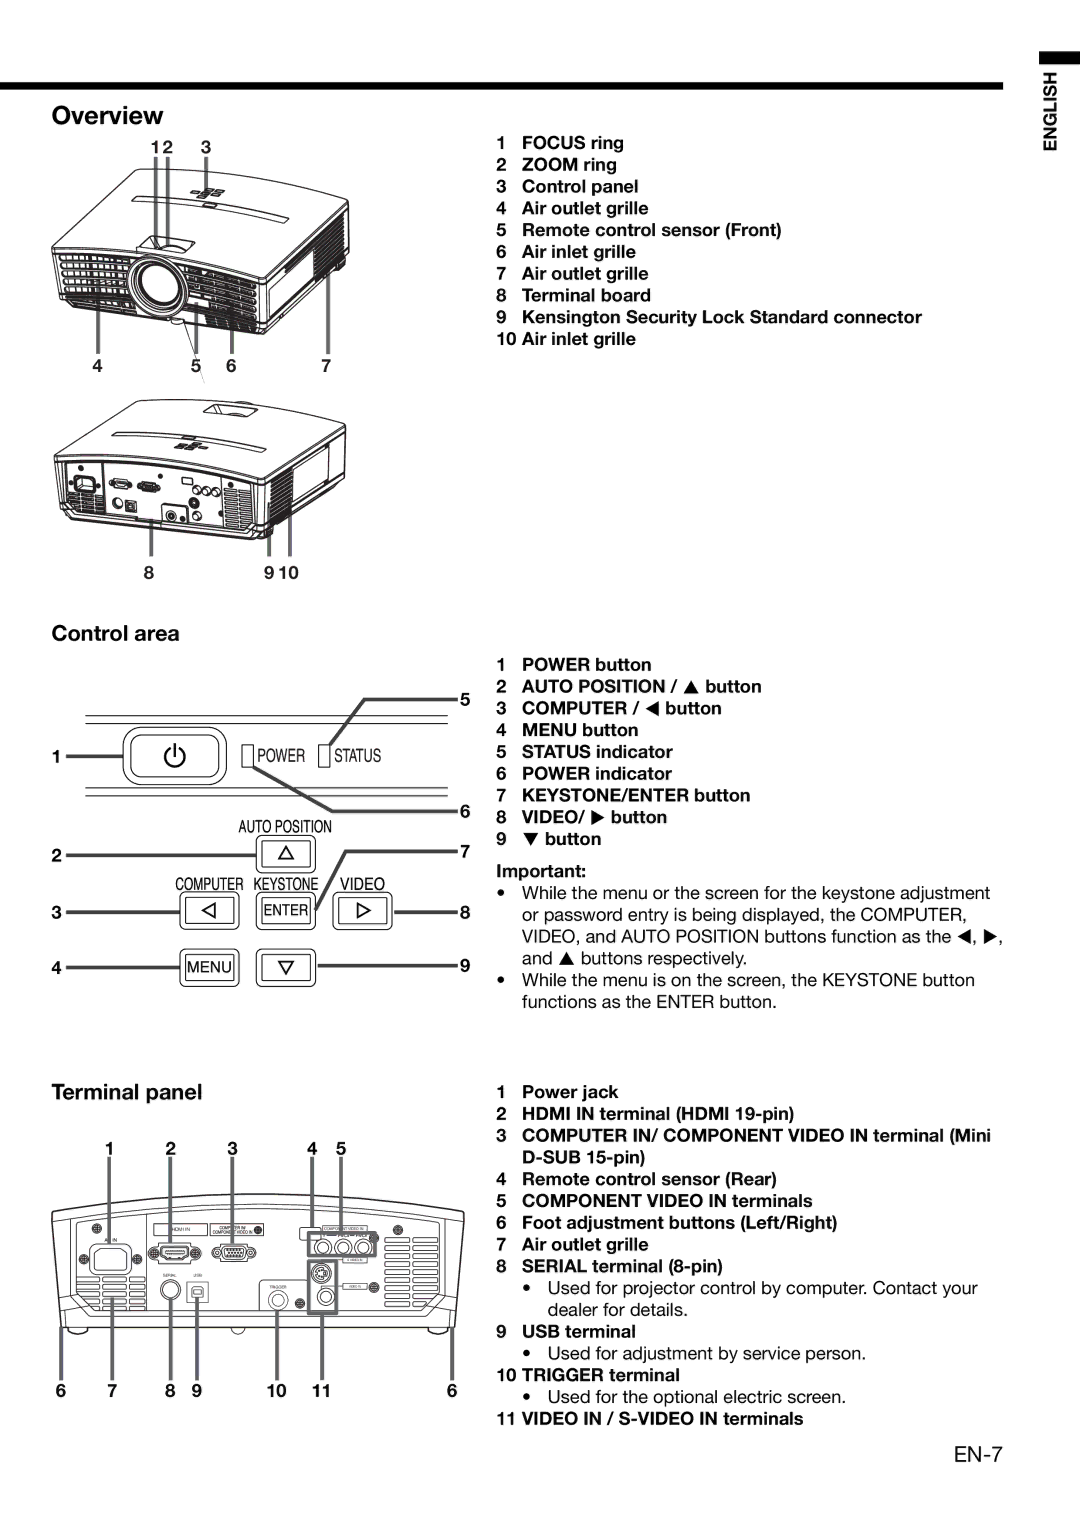 Mitsubishi Electronics HD4000 user manual Overview, Control area Terminal panel, EN-7 